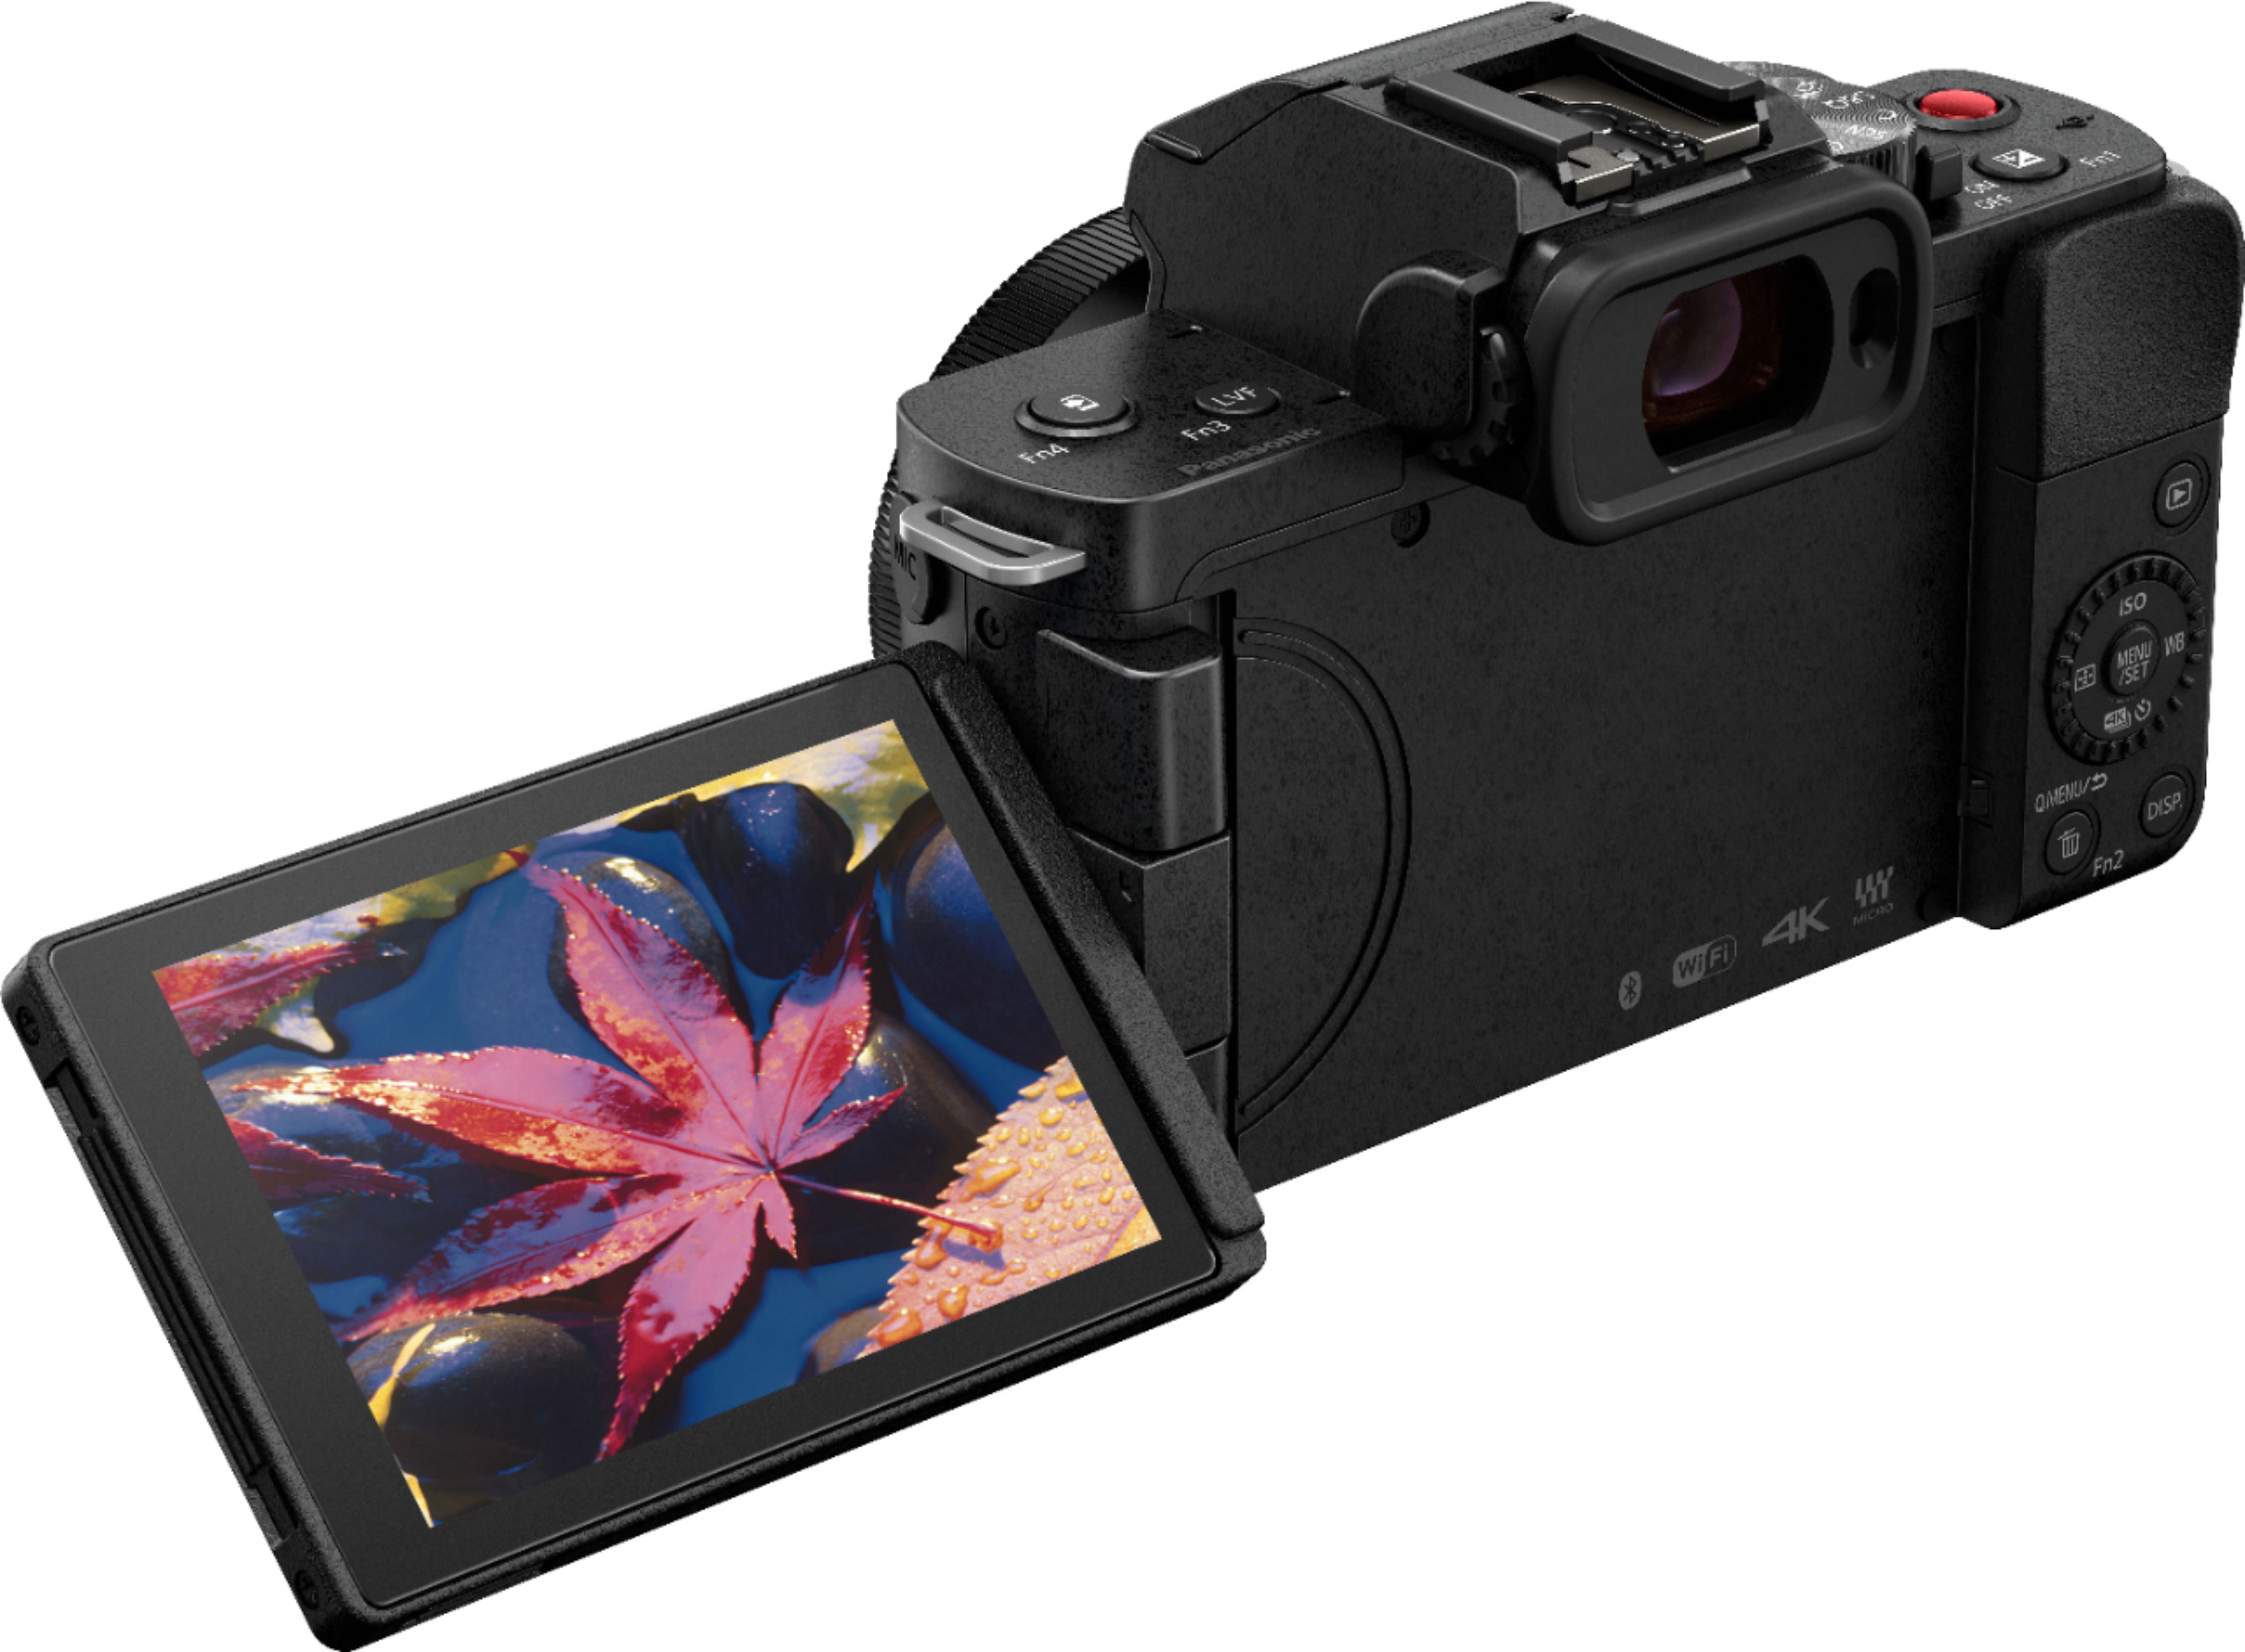 Panasonic DMC-SZ10K LUMIX Slim Camera with Built-in WiFi